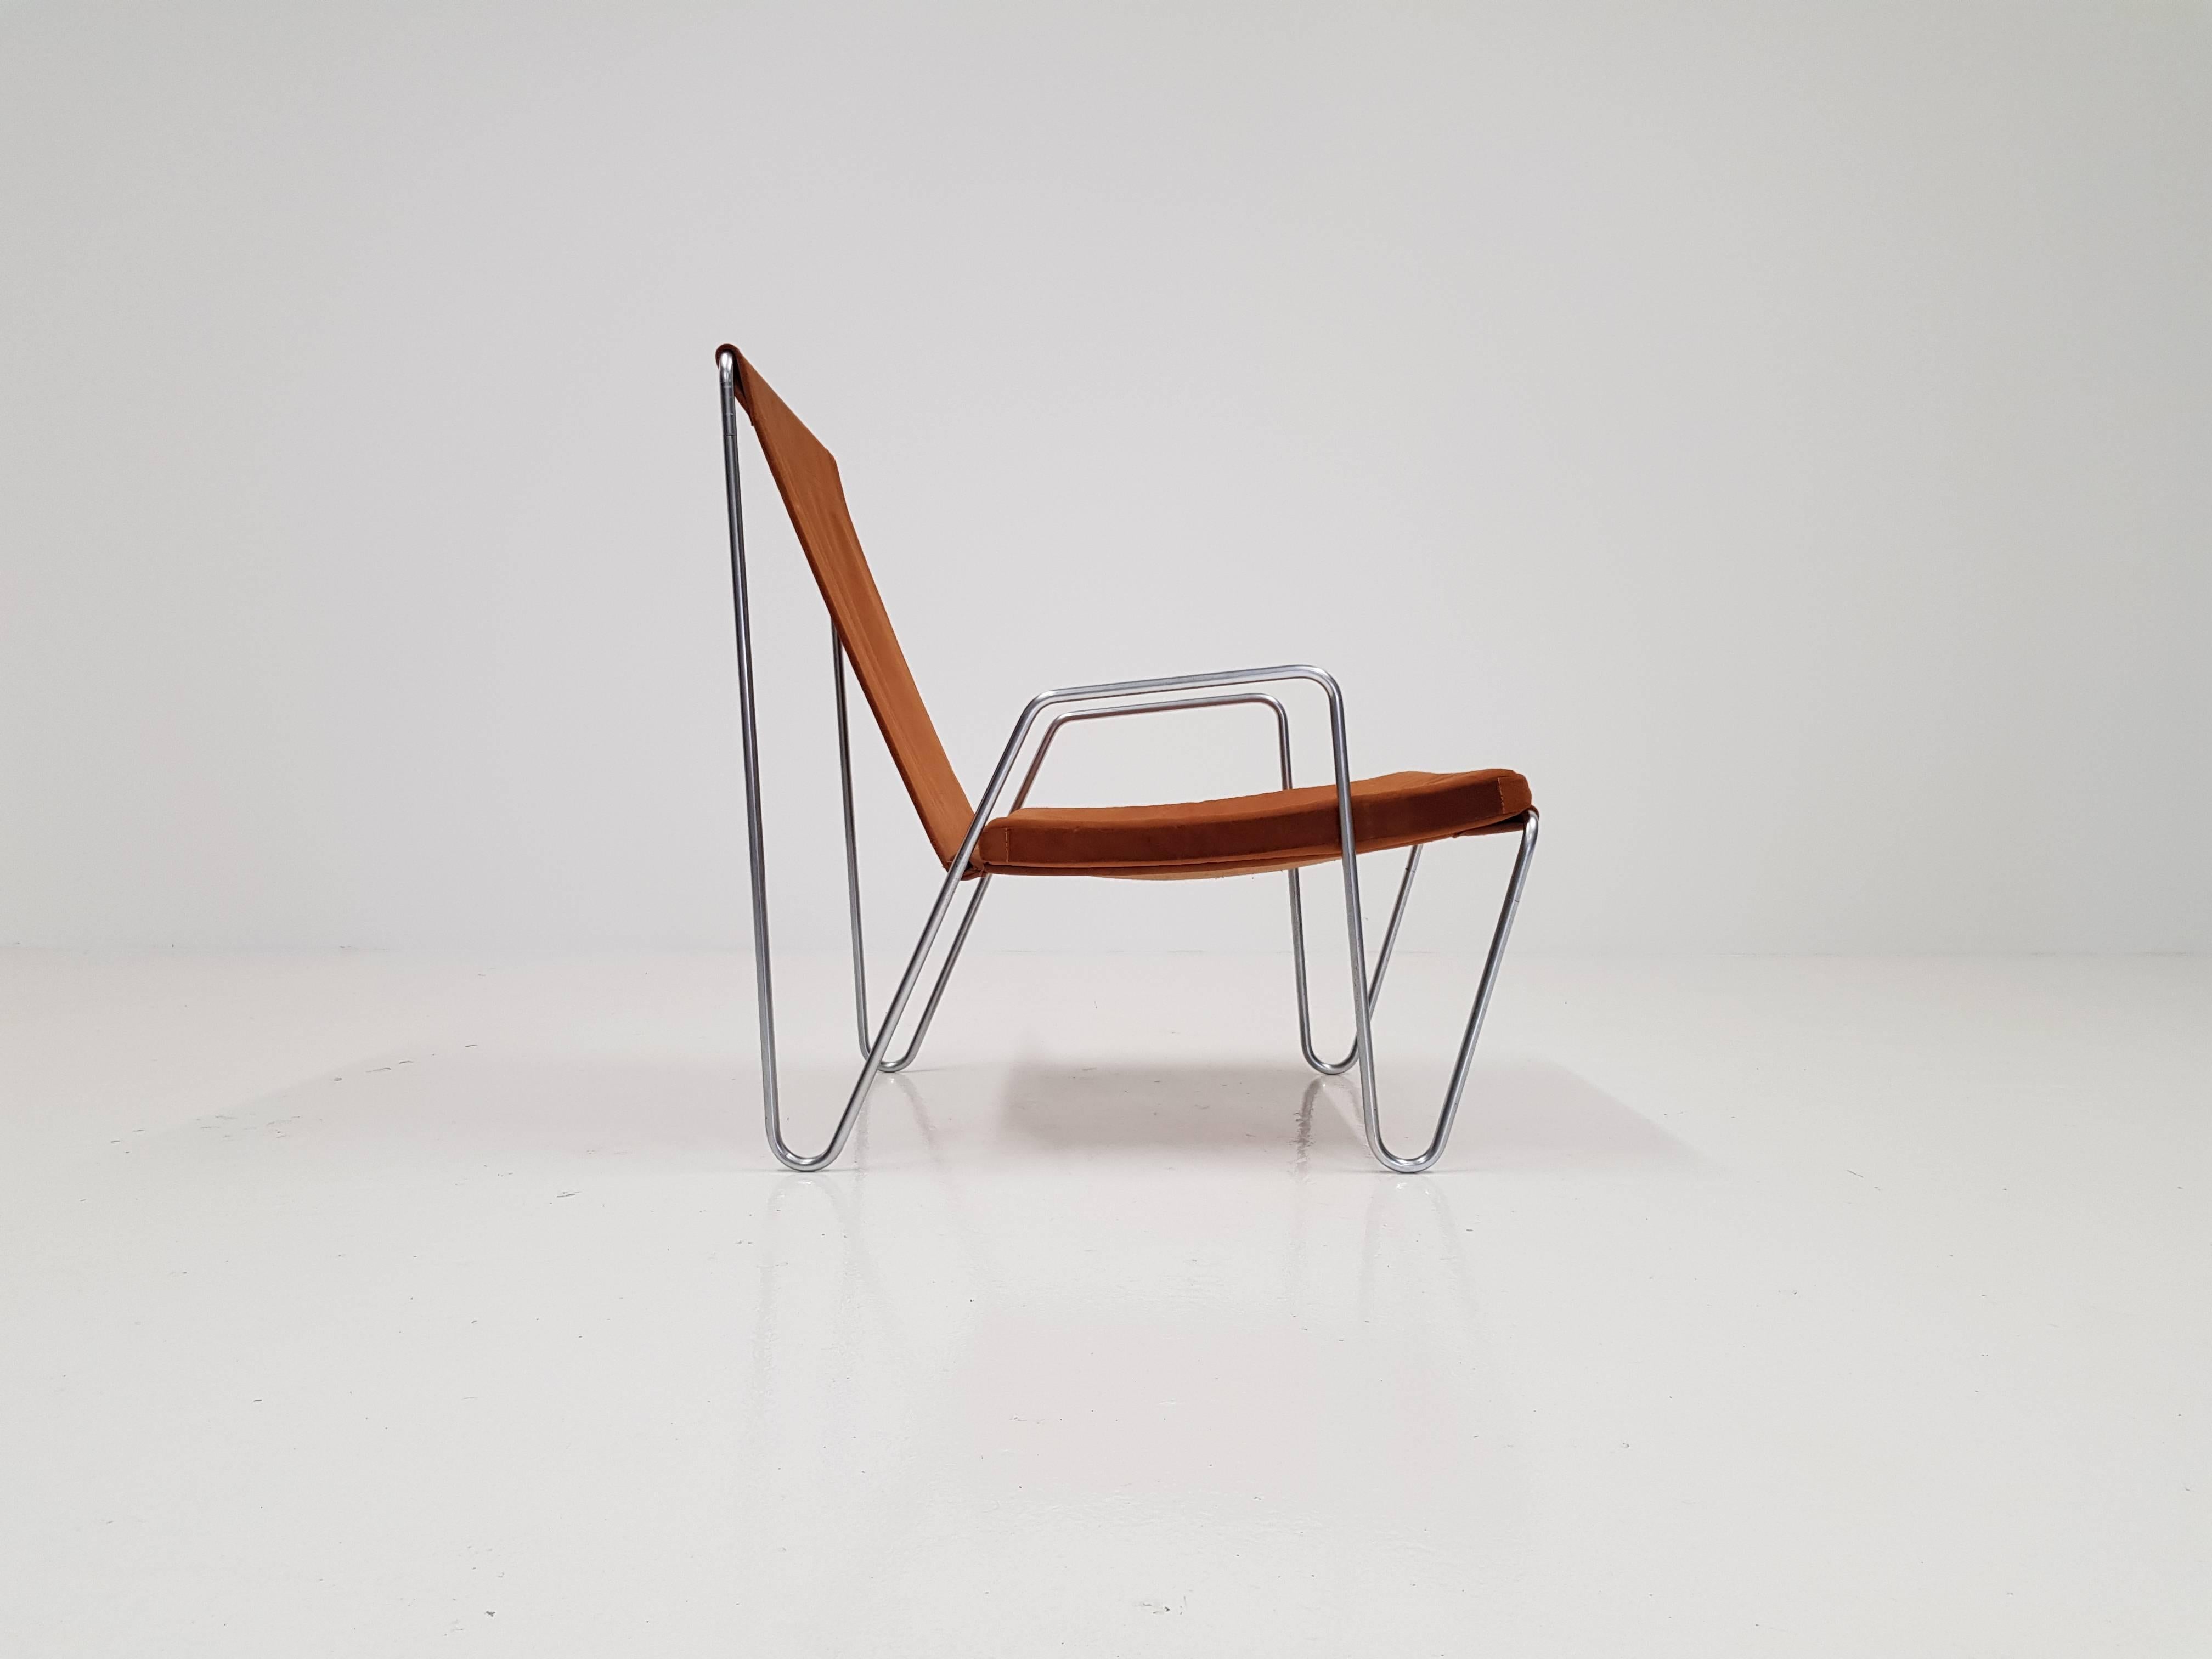 Steel Verner Panton 'Bachelor' Easy Chair, Manufactured by Fritz Hansen, Denmark, 1955